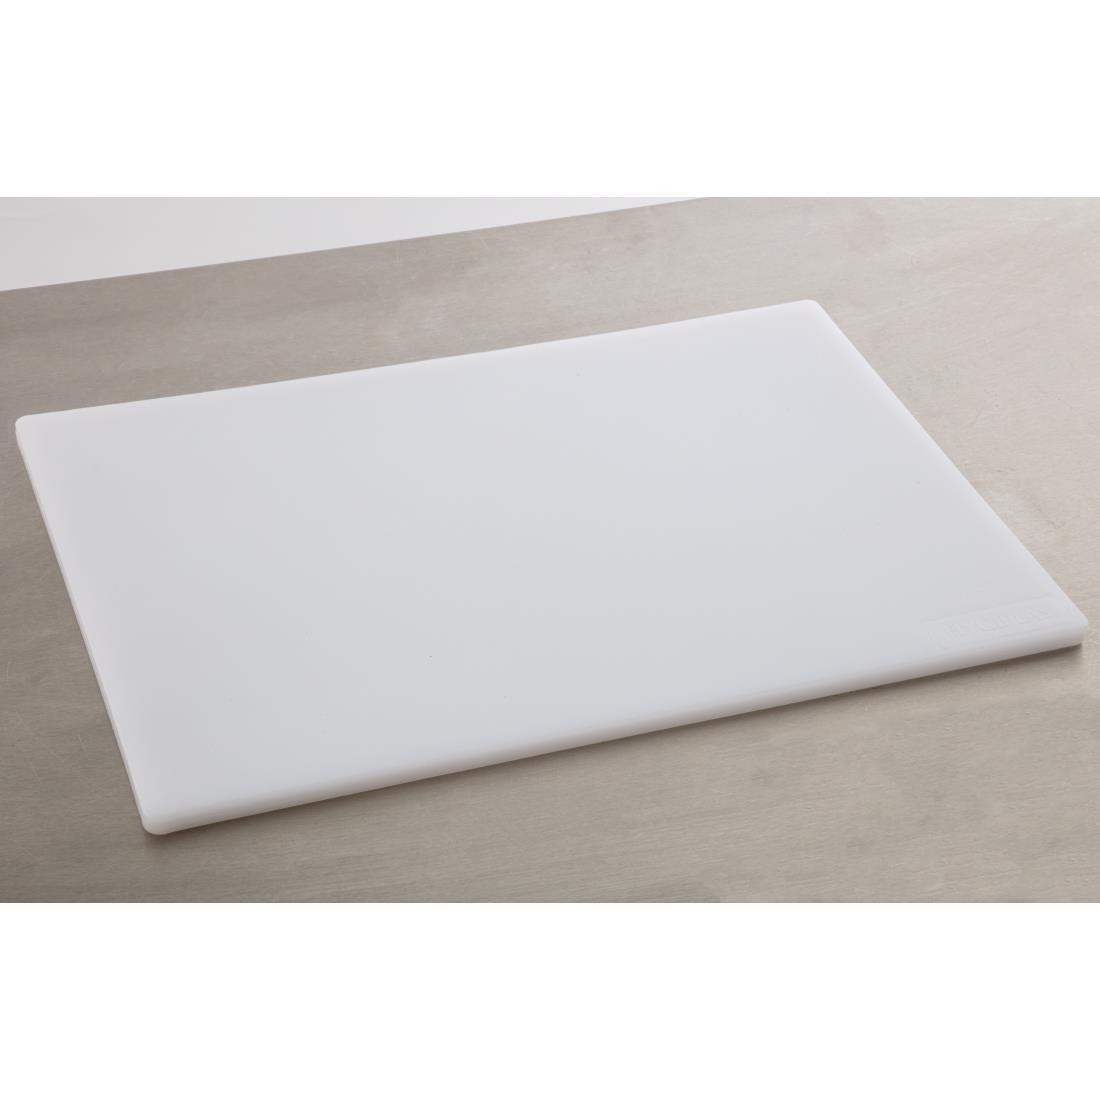 Hygiplas Low Density White Chopping Board Standard - J252  - 7